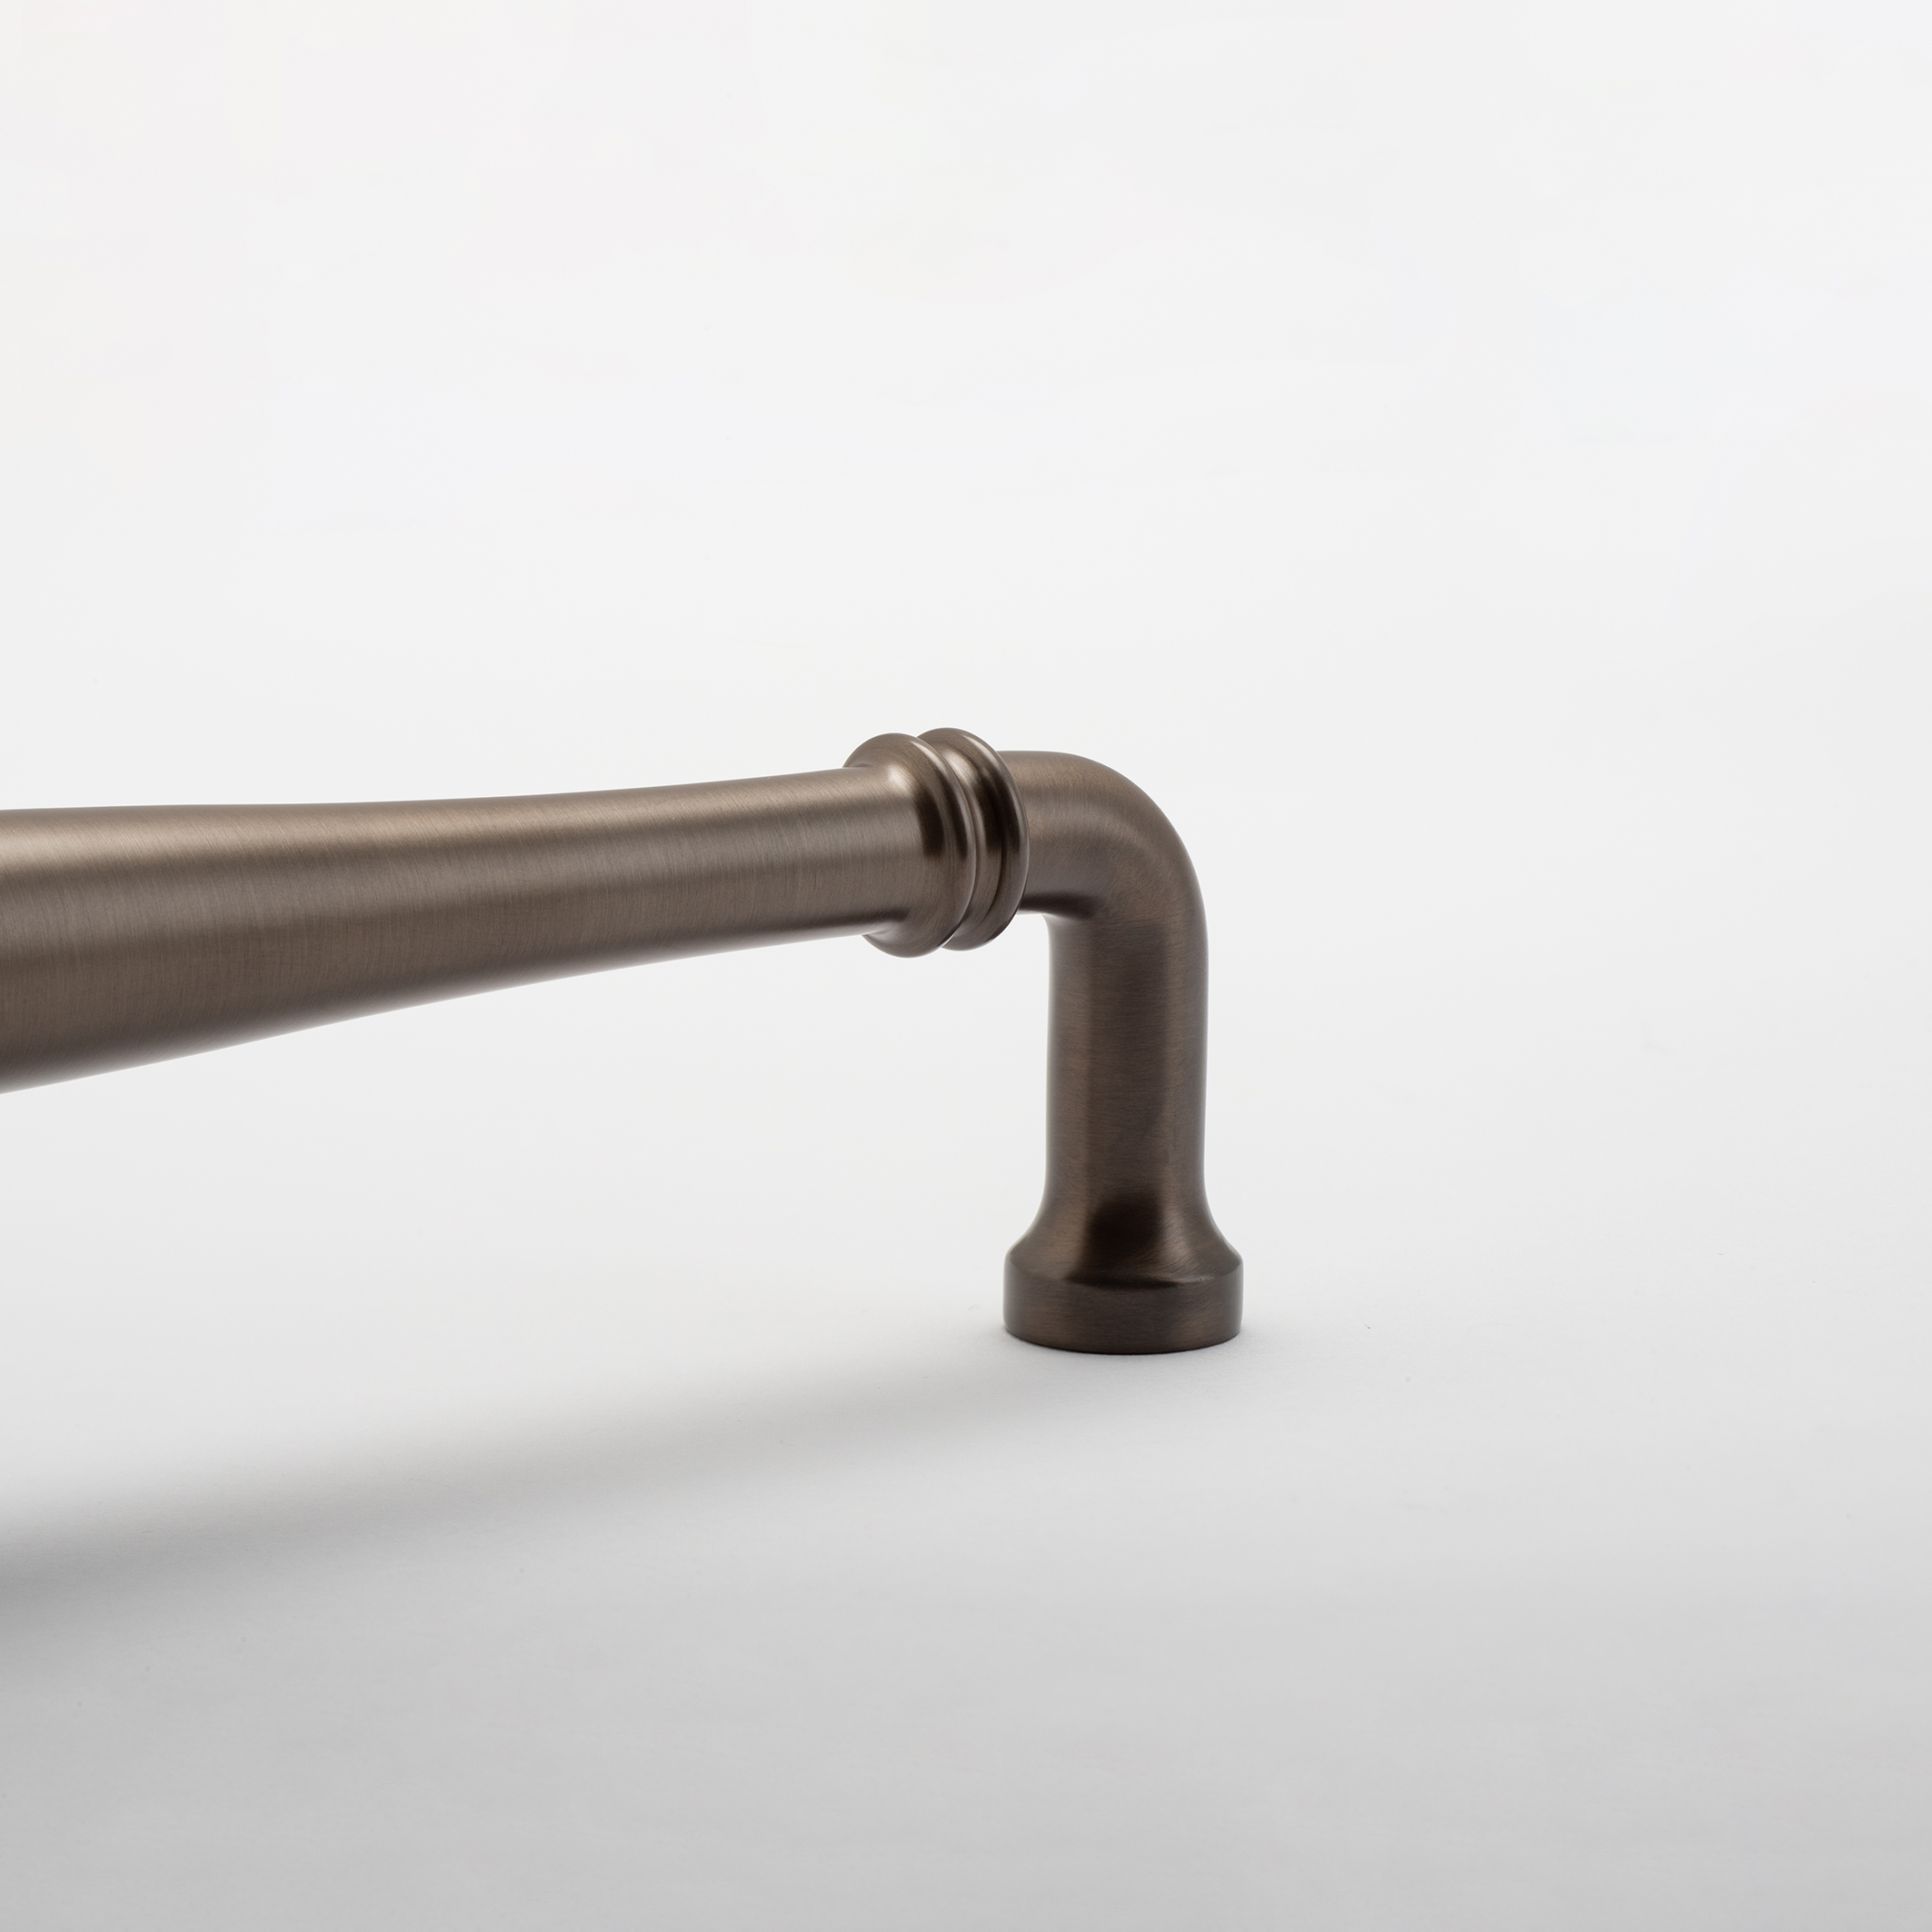 21101 - Sarlat Cabinet Pull - CTC450mm - Signature Brass